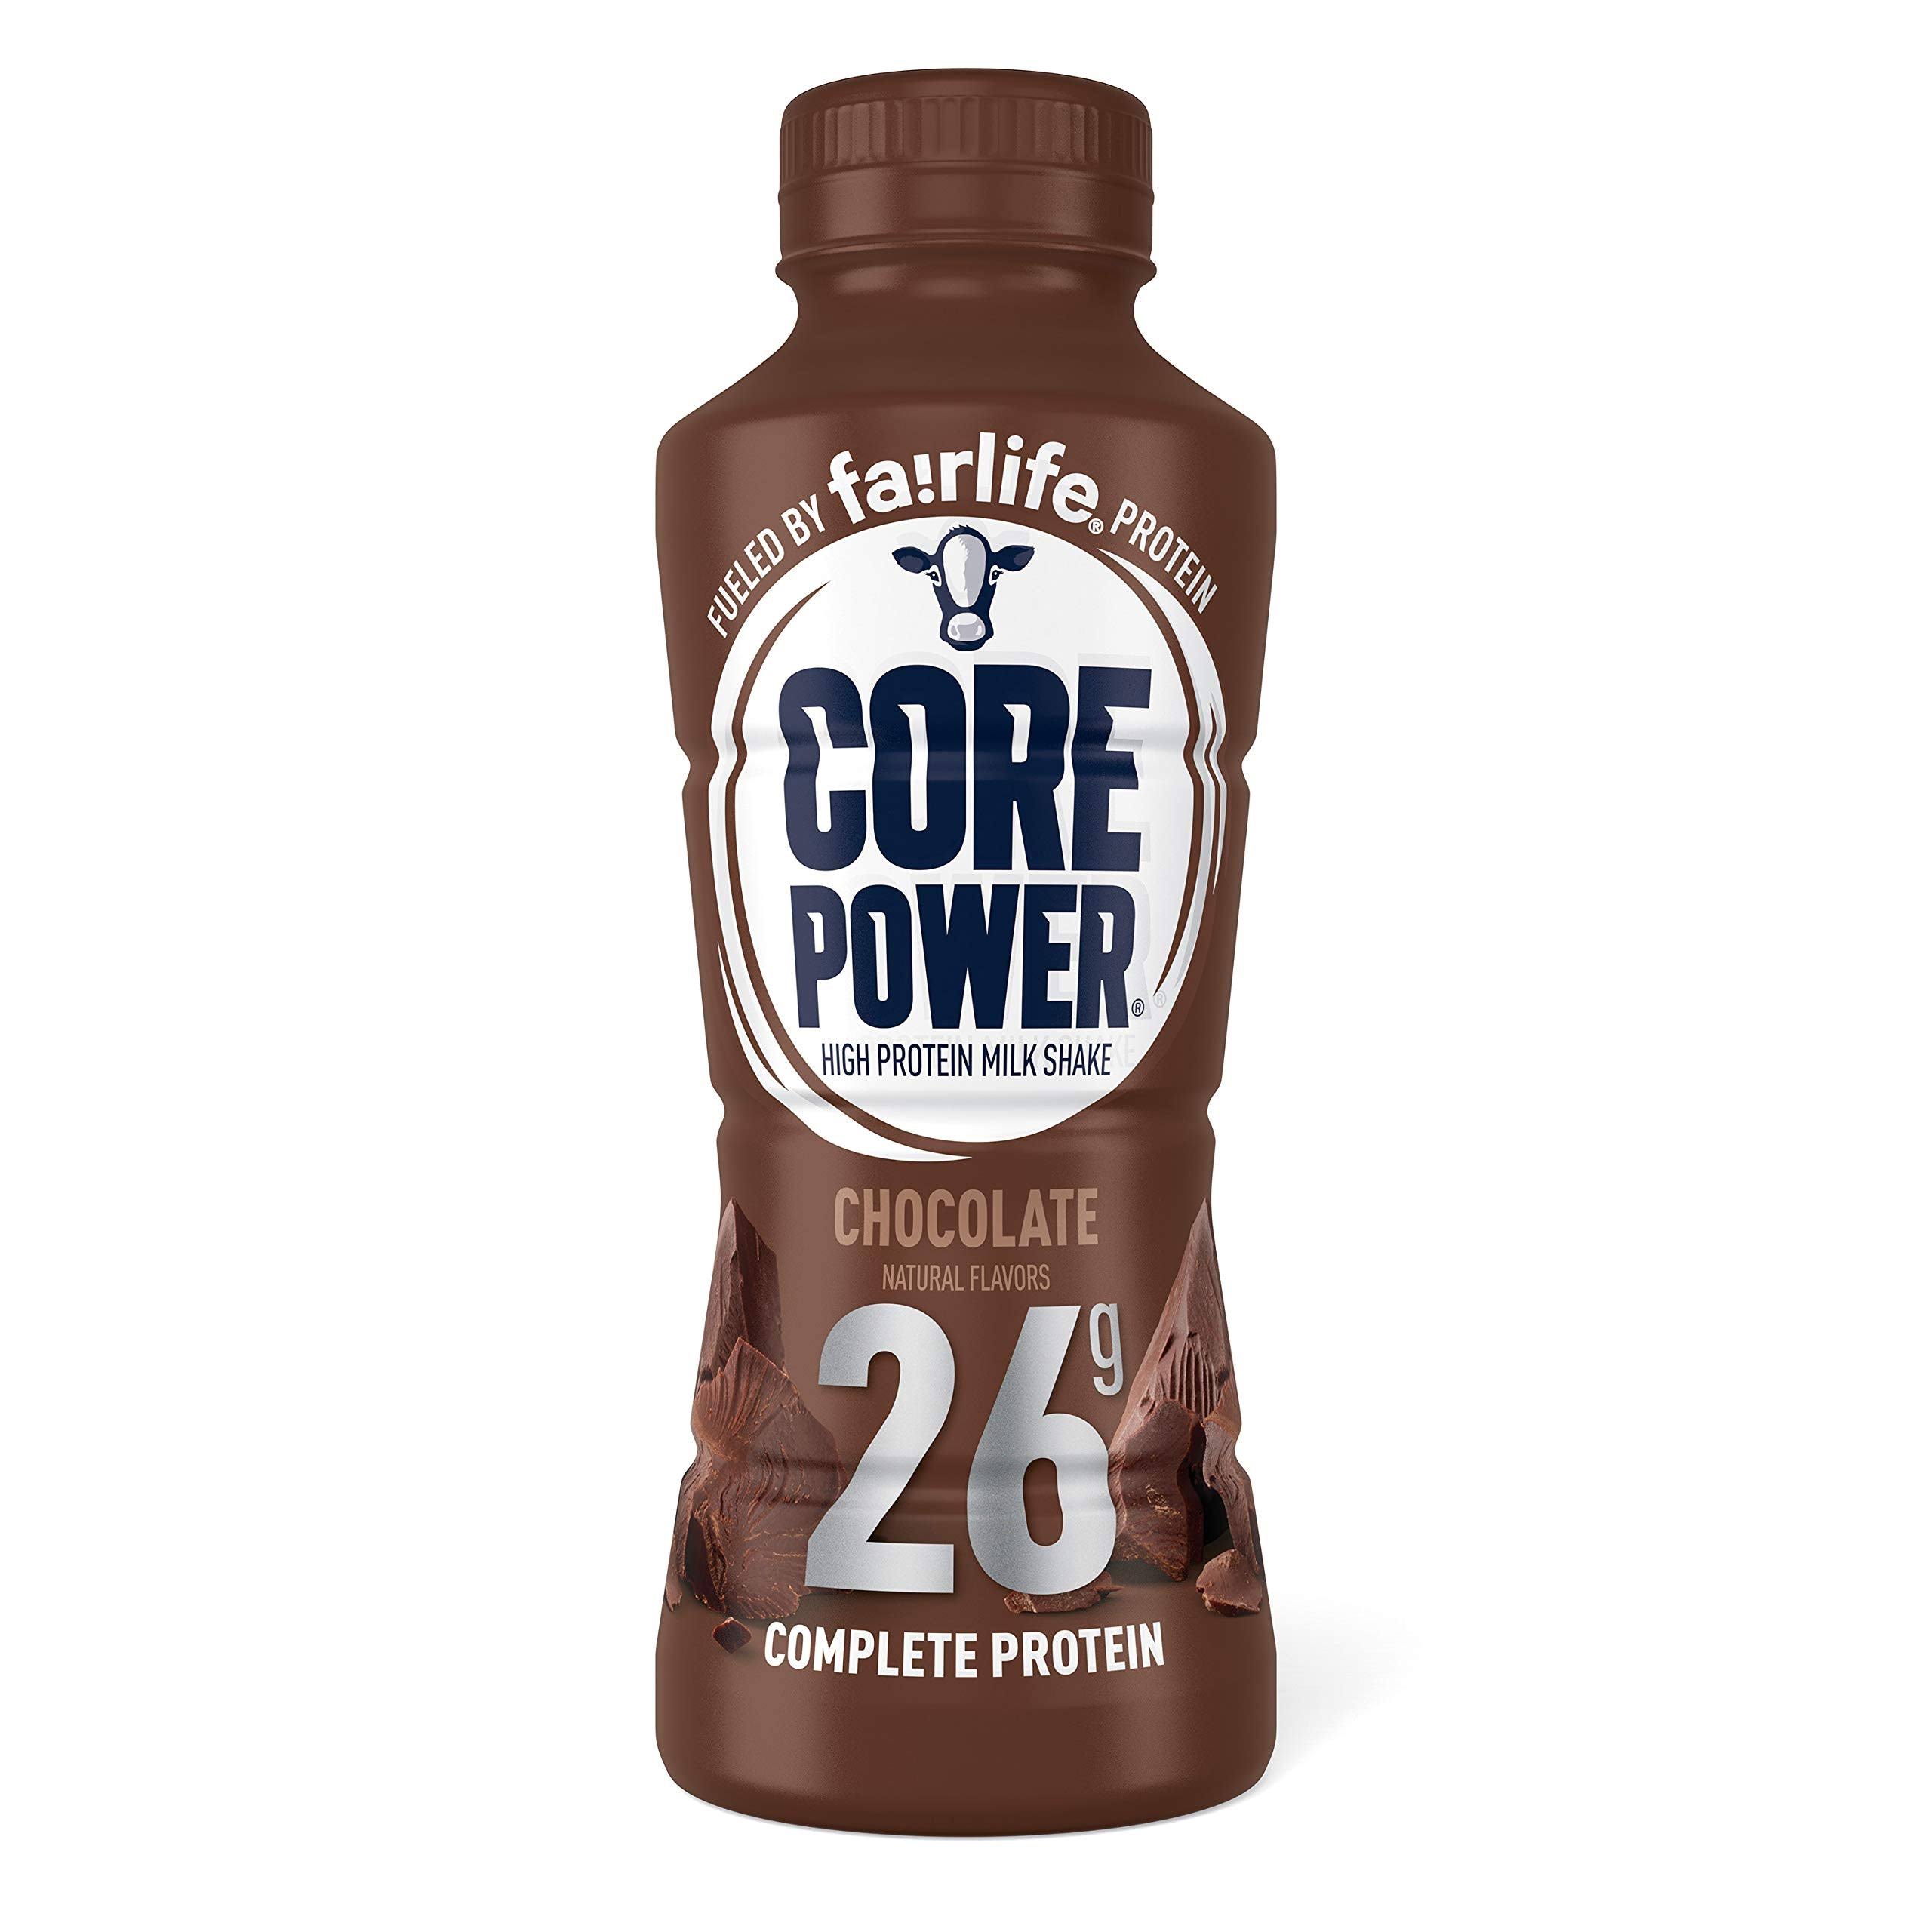 Core Power High Protein Milk Shake, Chocolate, 14 fl oz (Pack of 12)